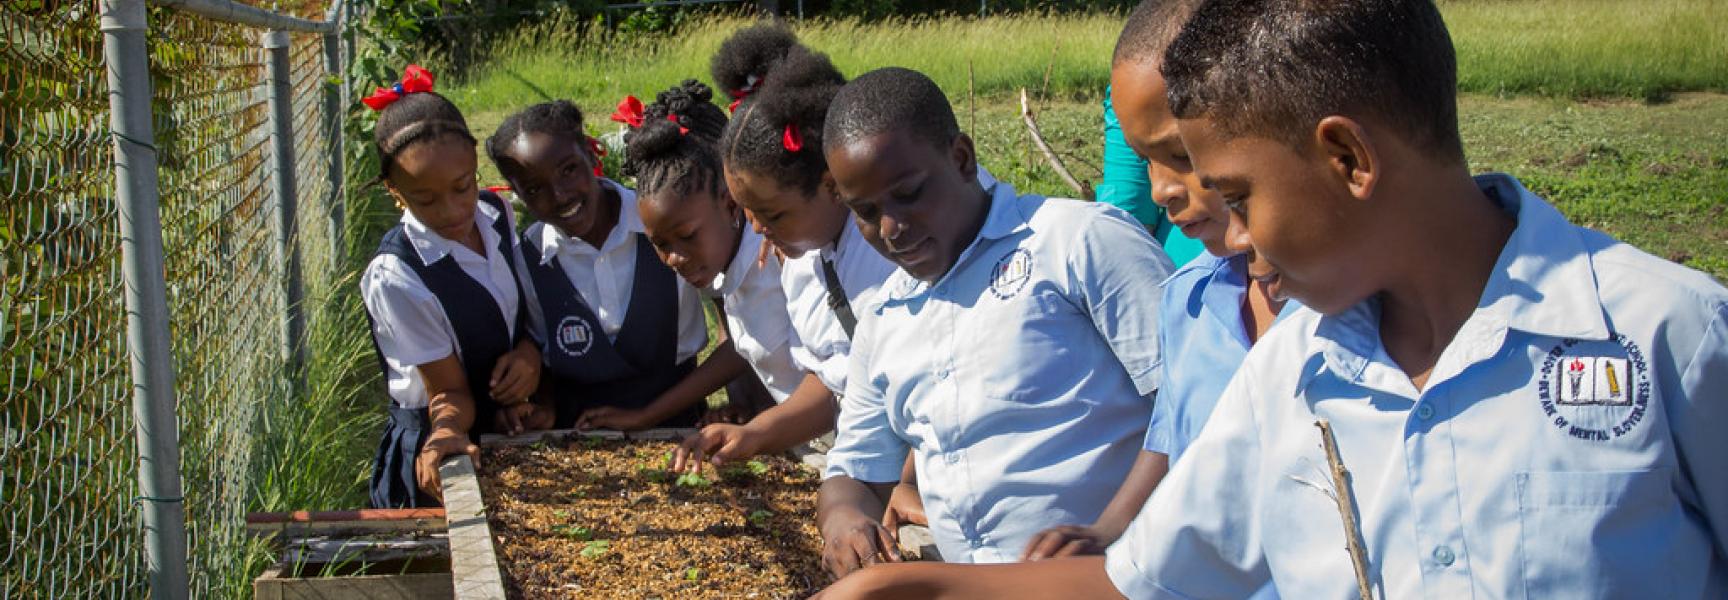 Children in Grenada planting seeds